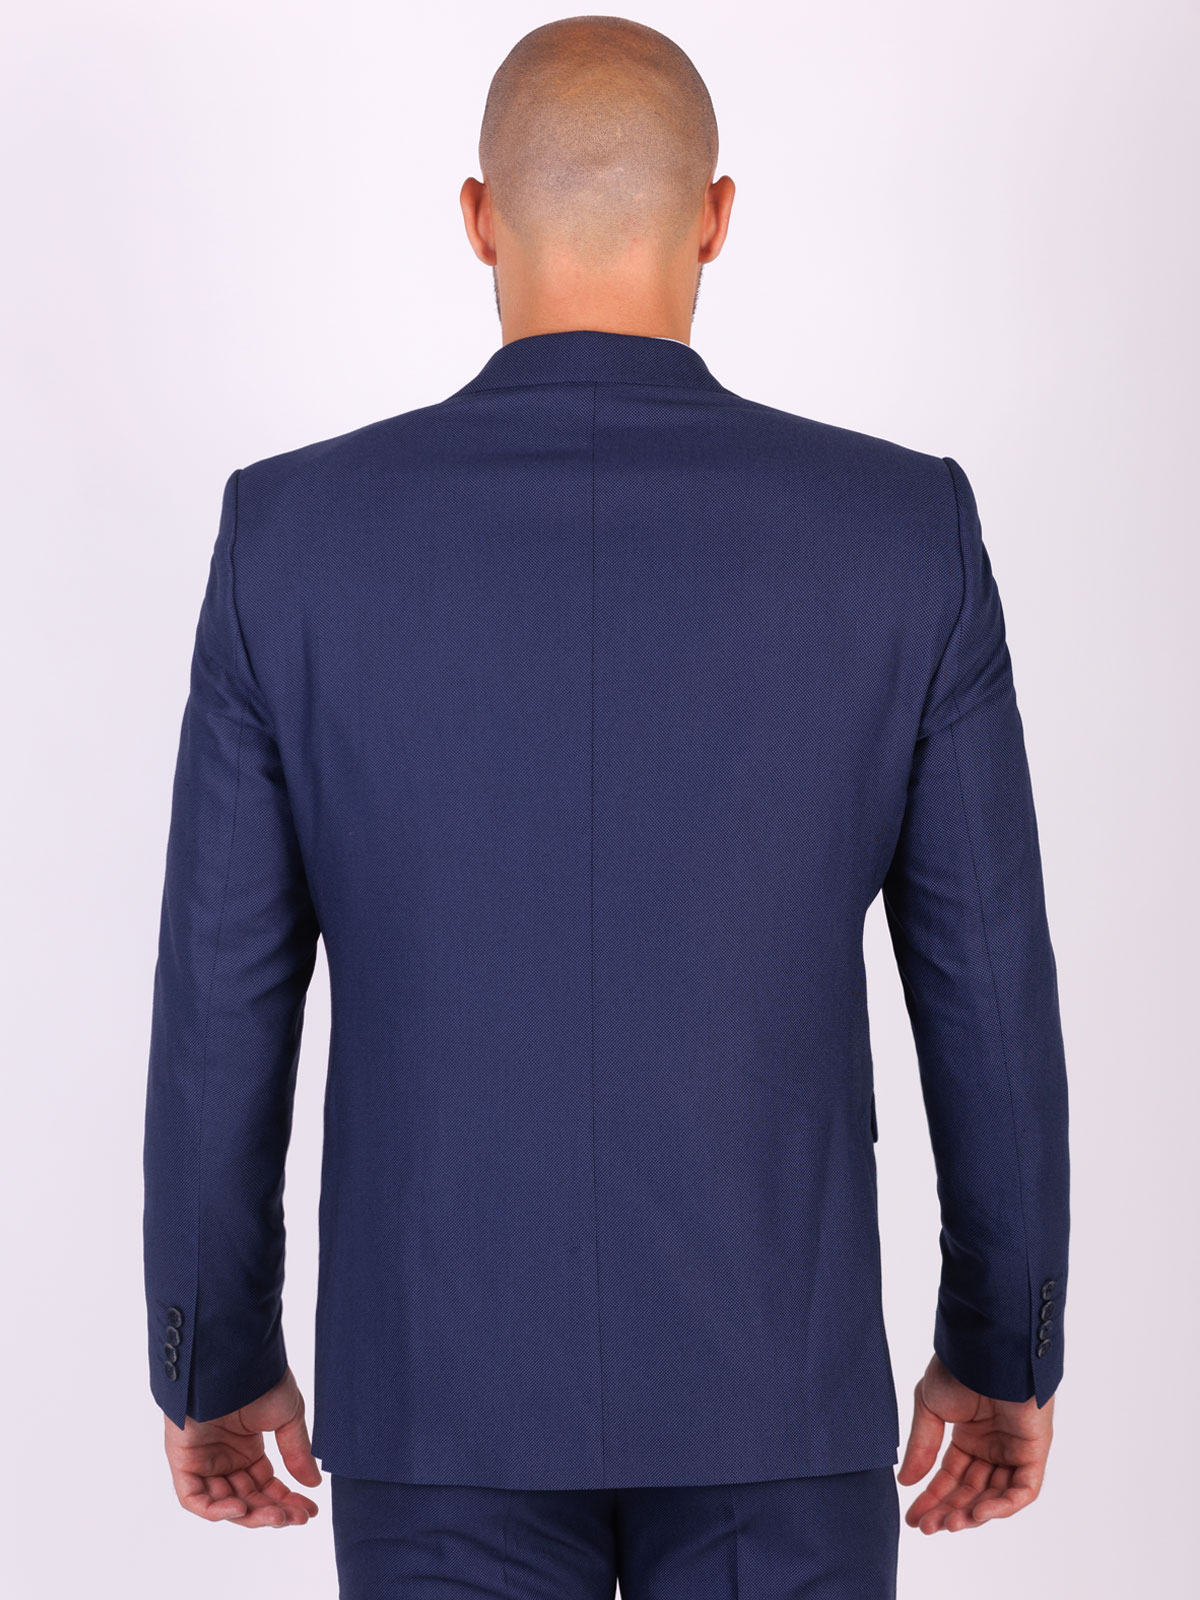 Formal jacket in navy blue - 64123 € 149.60 img3